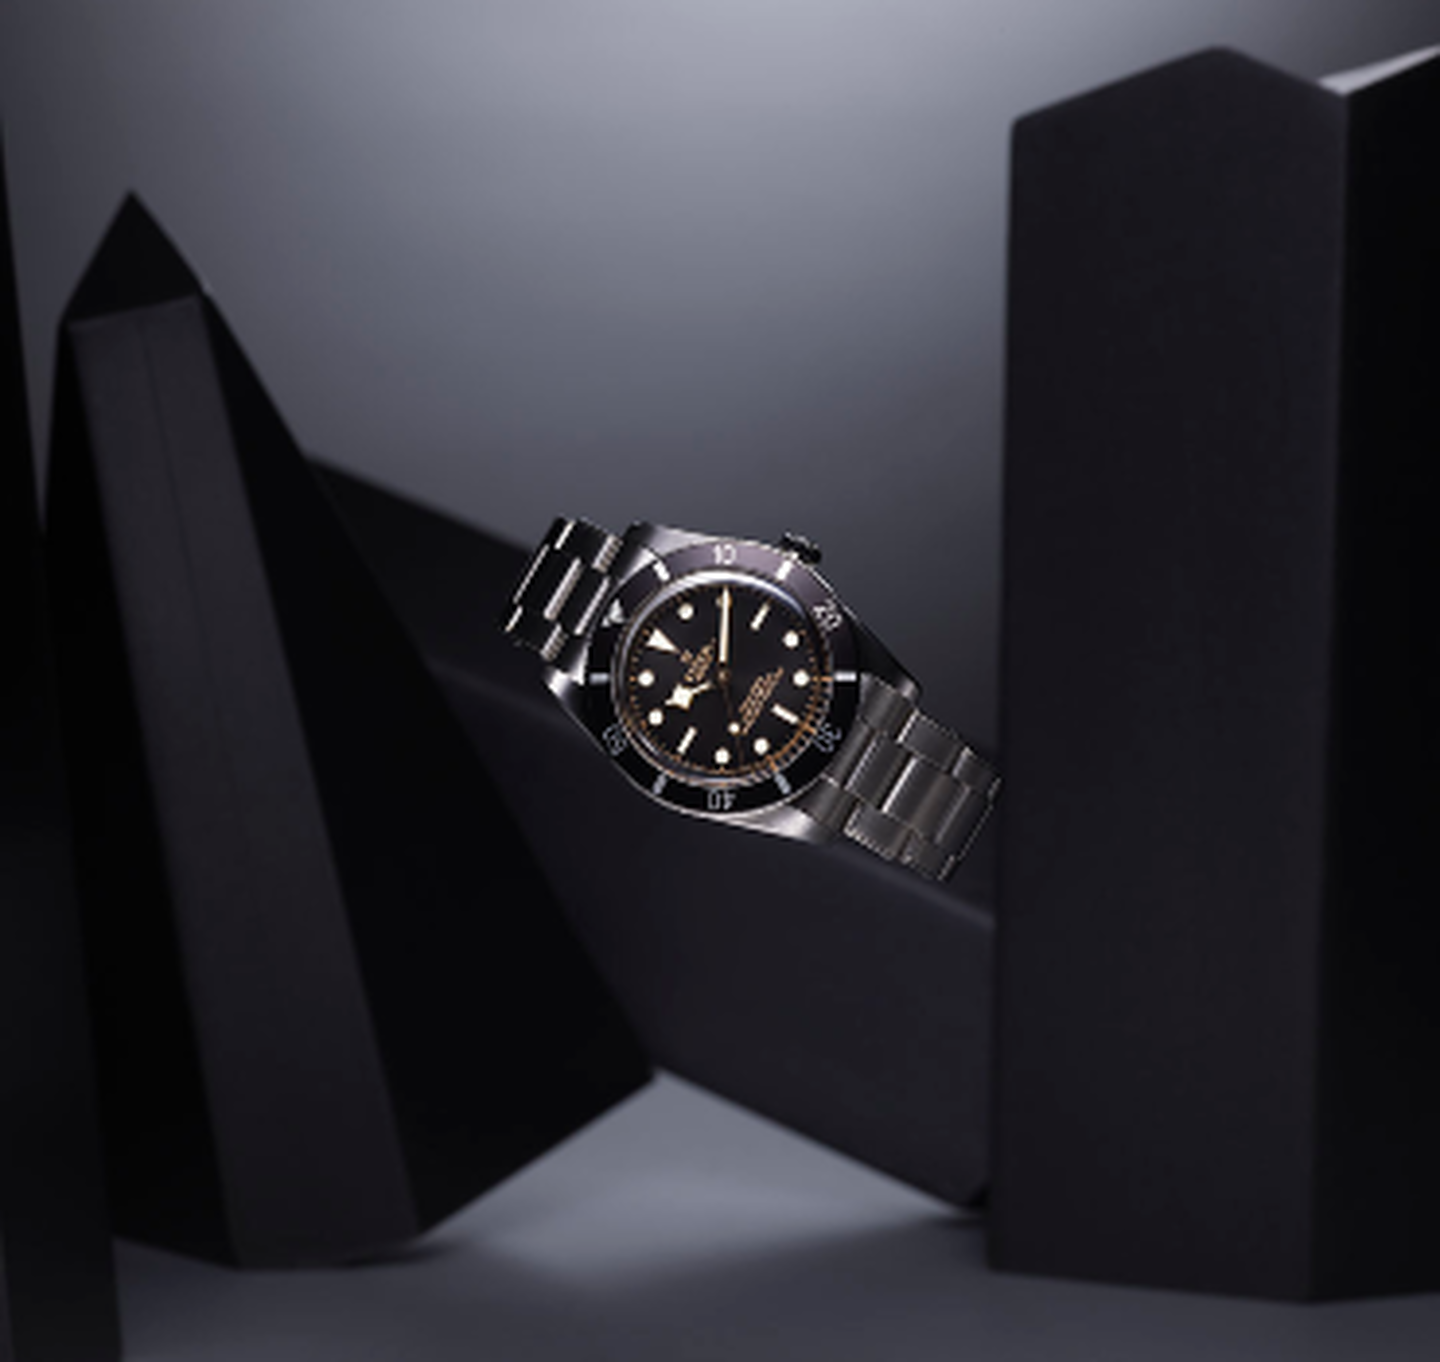 Tudor Black Bay watch on a black background